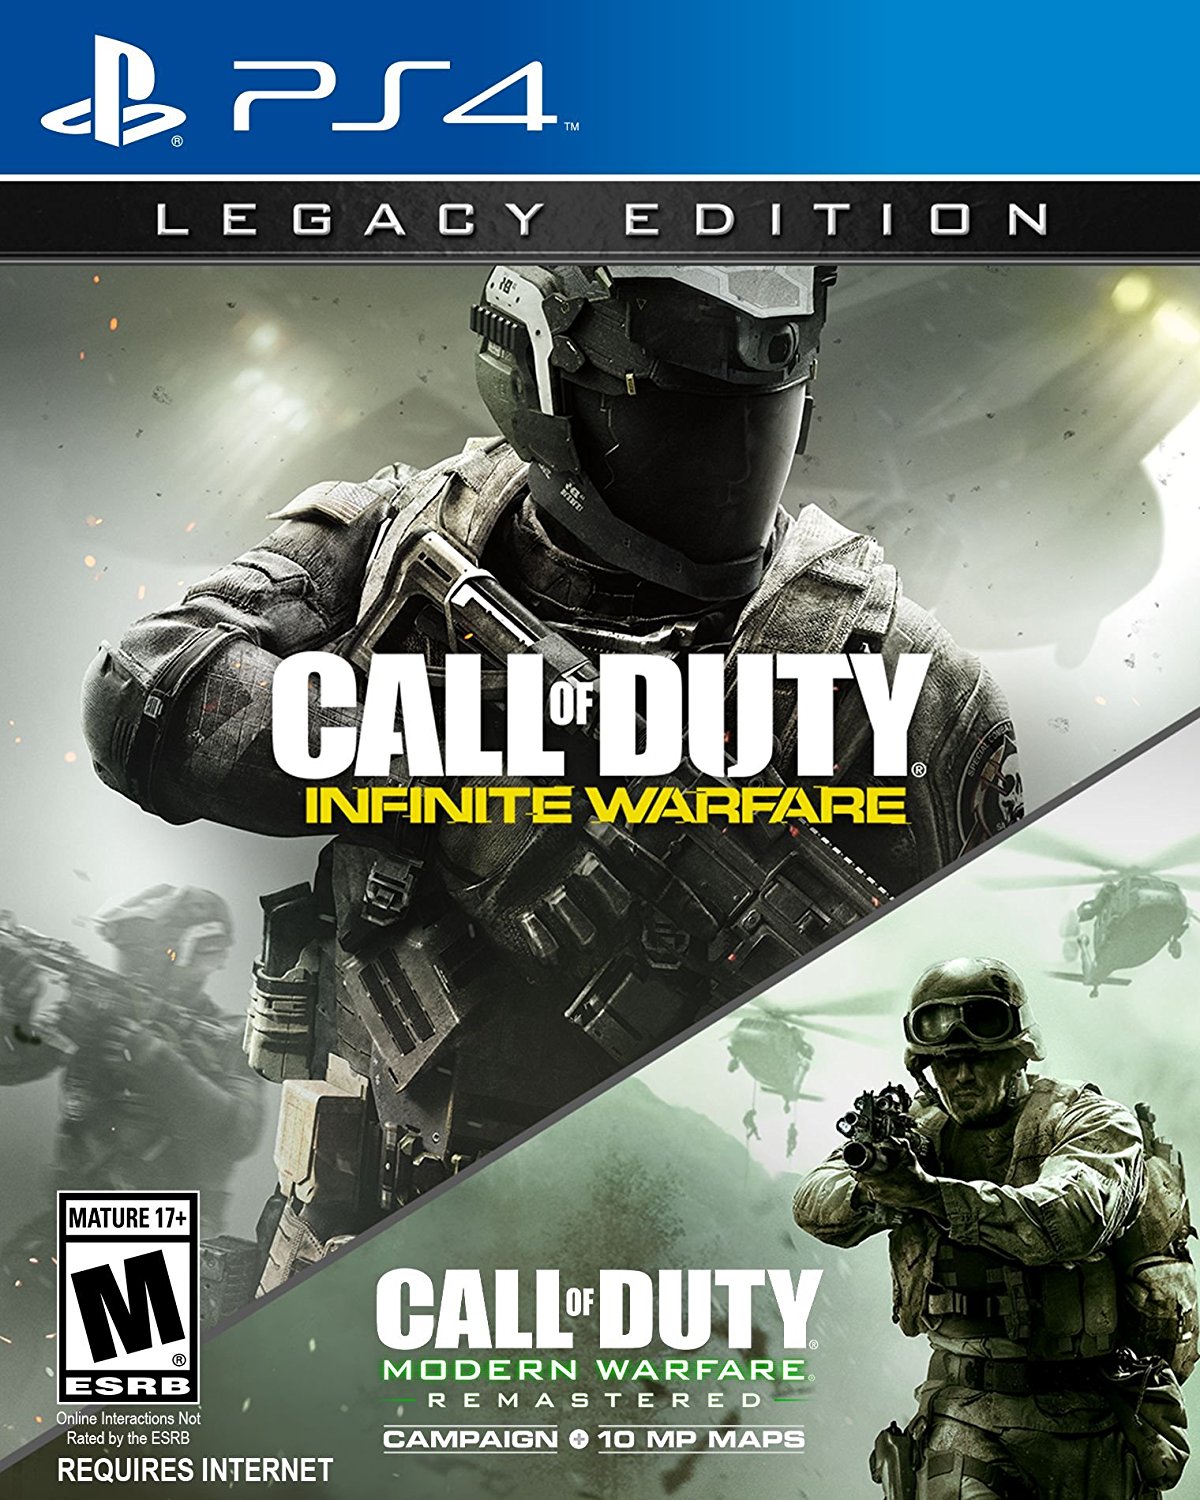 Call of Duty: Infinite Warfare Legacy Edition $49.99 or Call of Duty: Inifinte Warfare (PS4, Xbox One or PC) $34.99 via Amazon